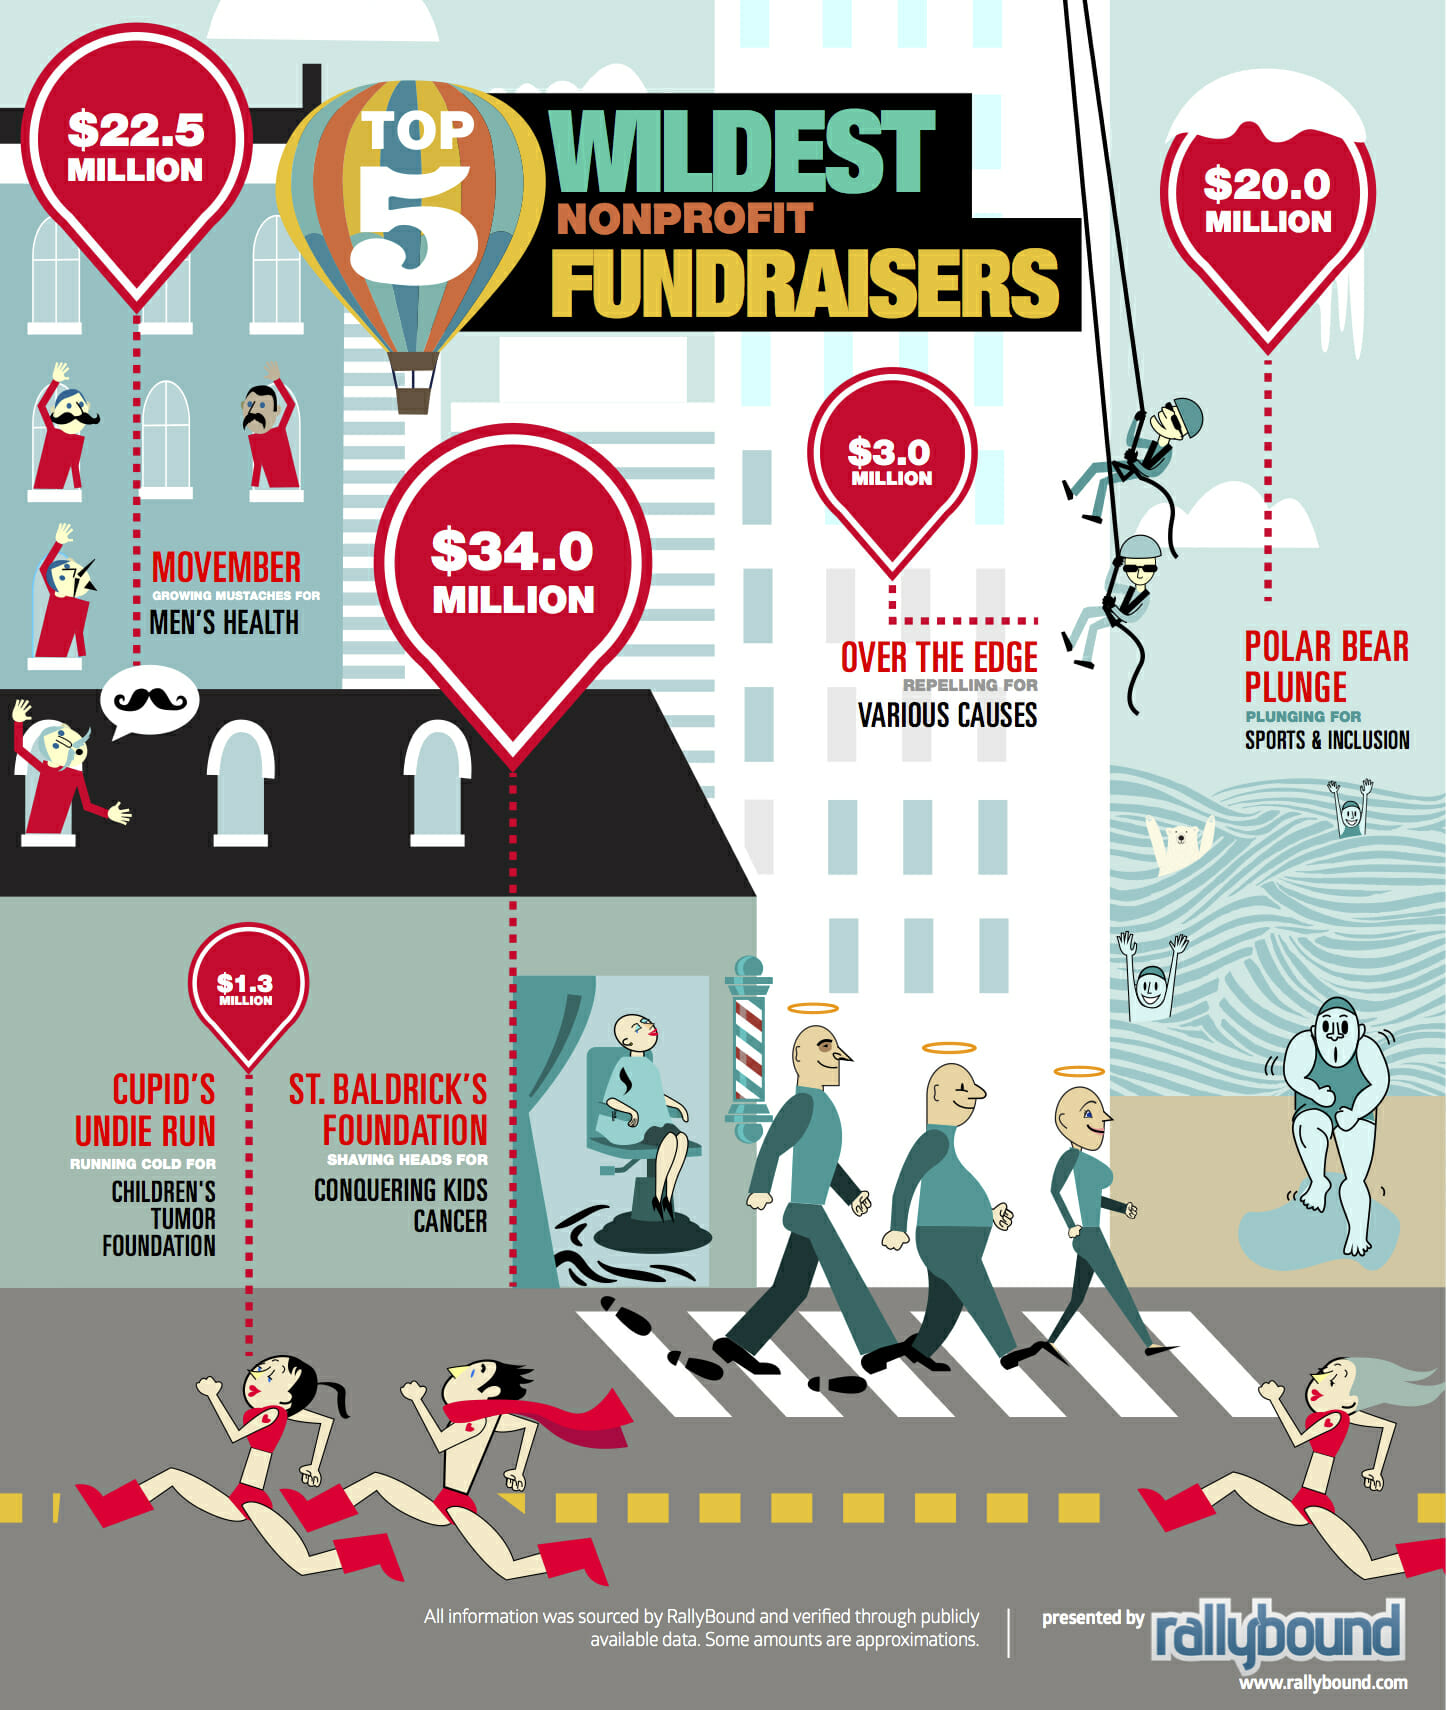 Top 5 Wildest Nonprofit Fundraisers